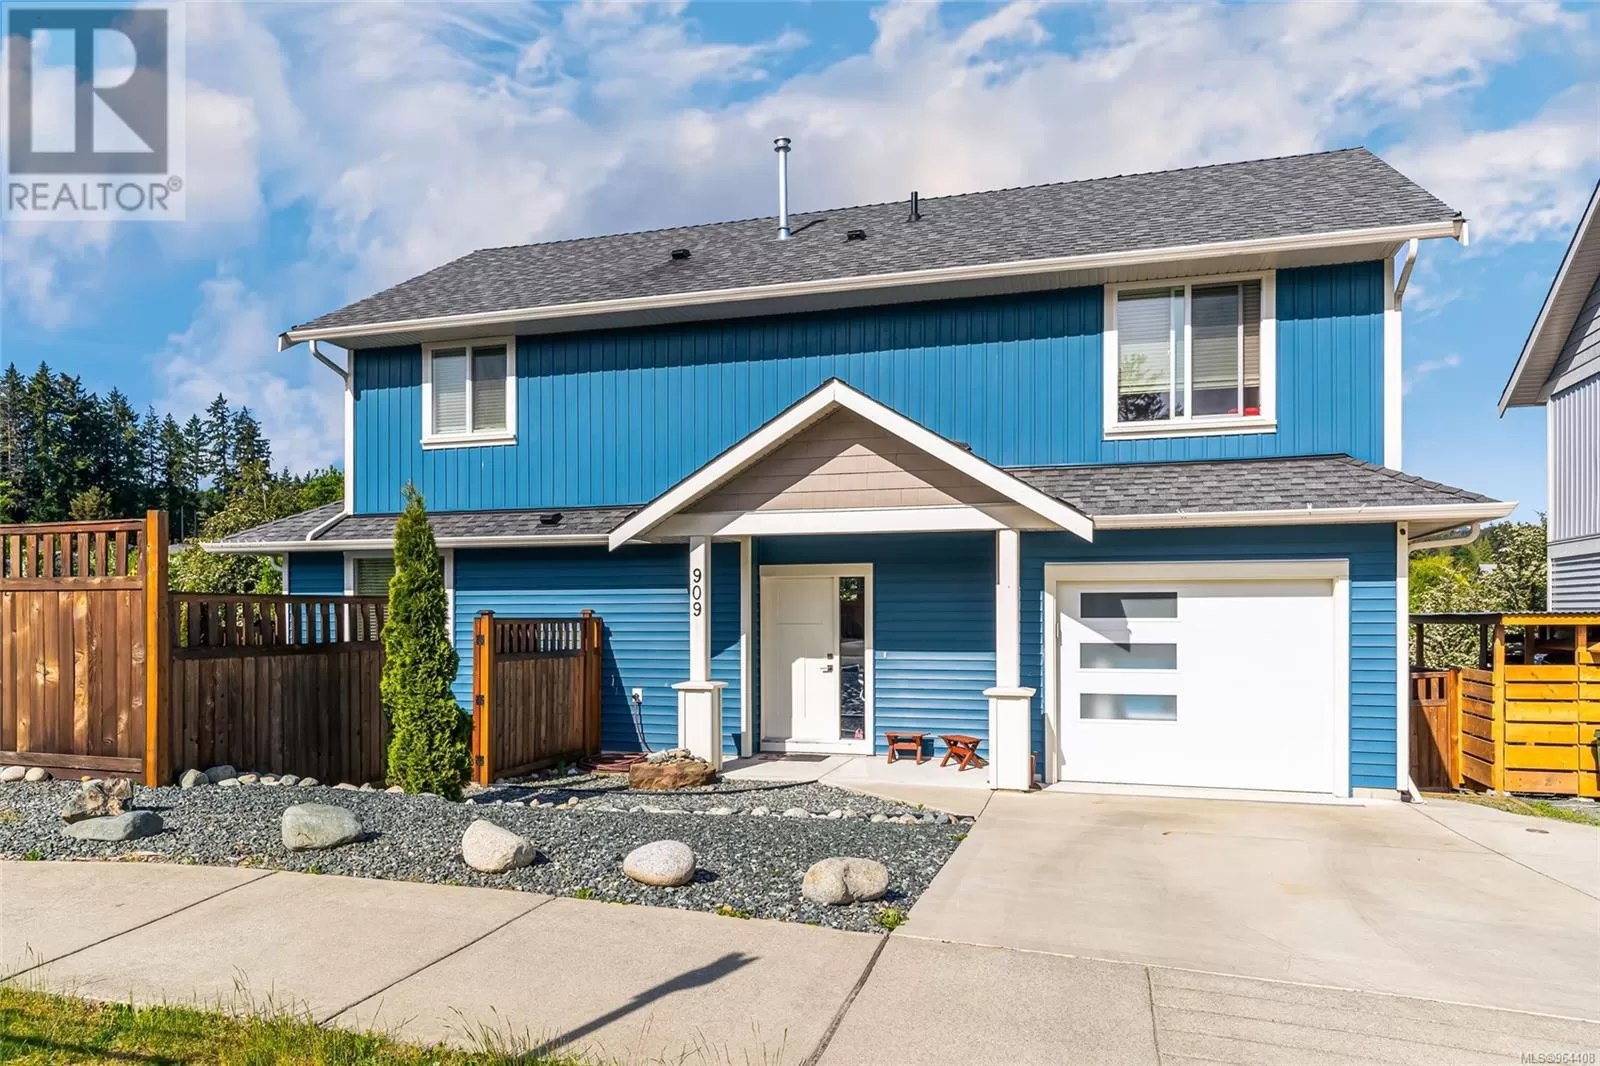 House for rent: 909 Boardwalk Ave, Nanaimo, British Columbia V9R 0J8